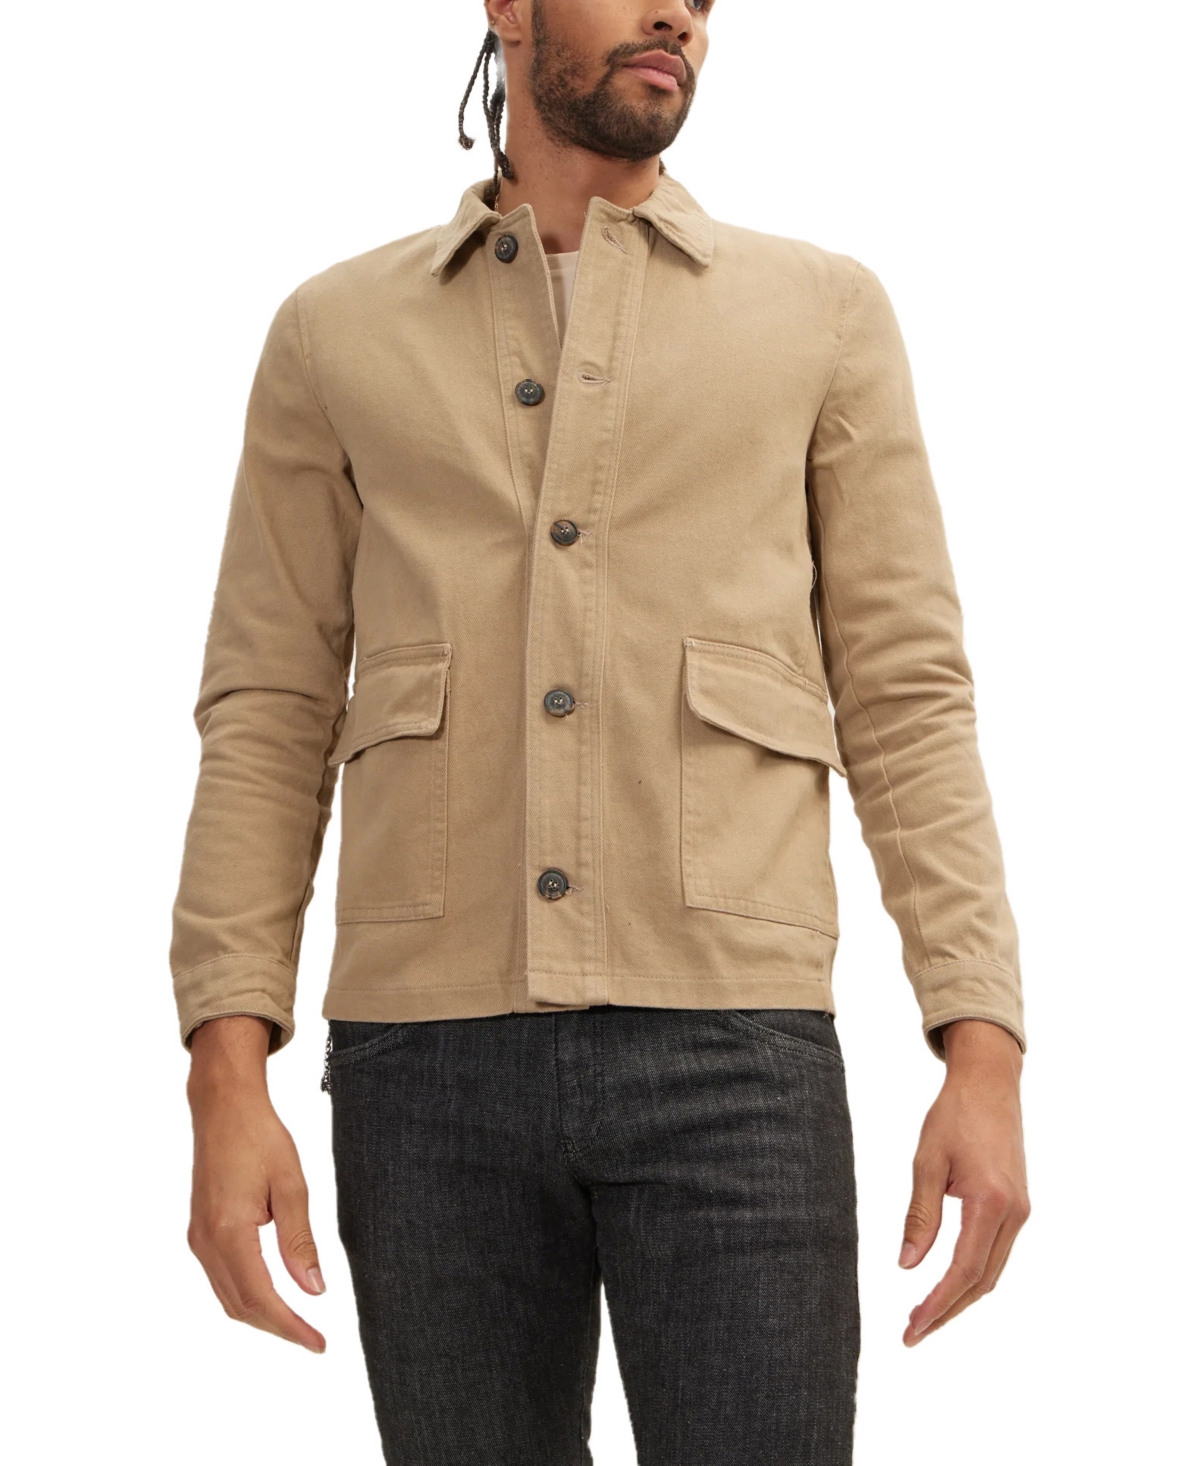 Men's Modern Button-Up Cotton Jacket - Camel